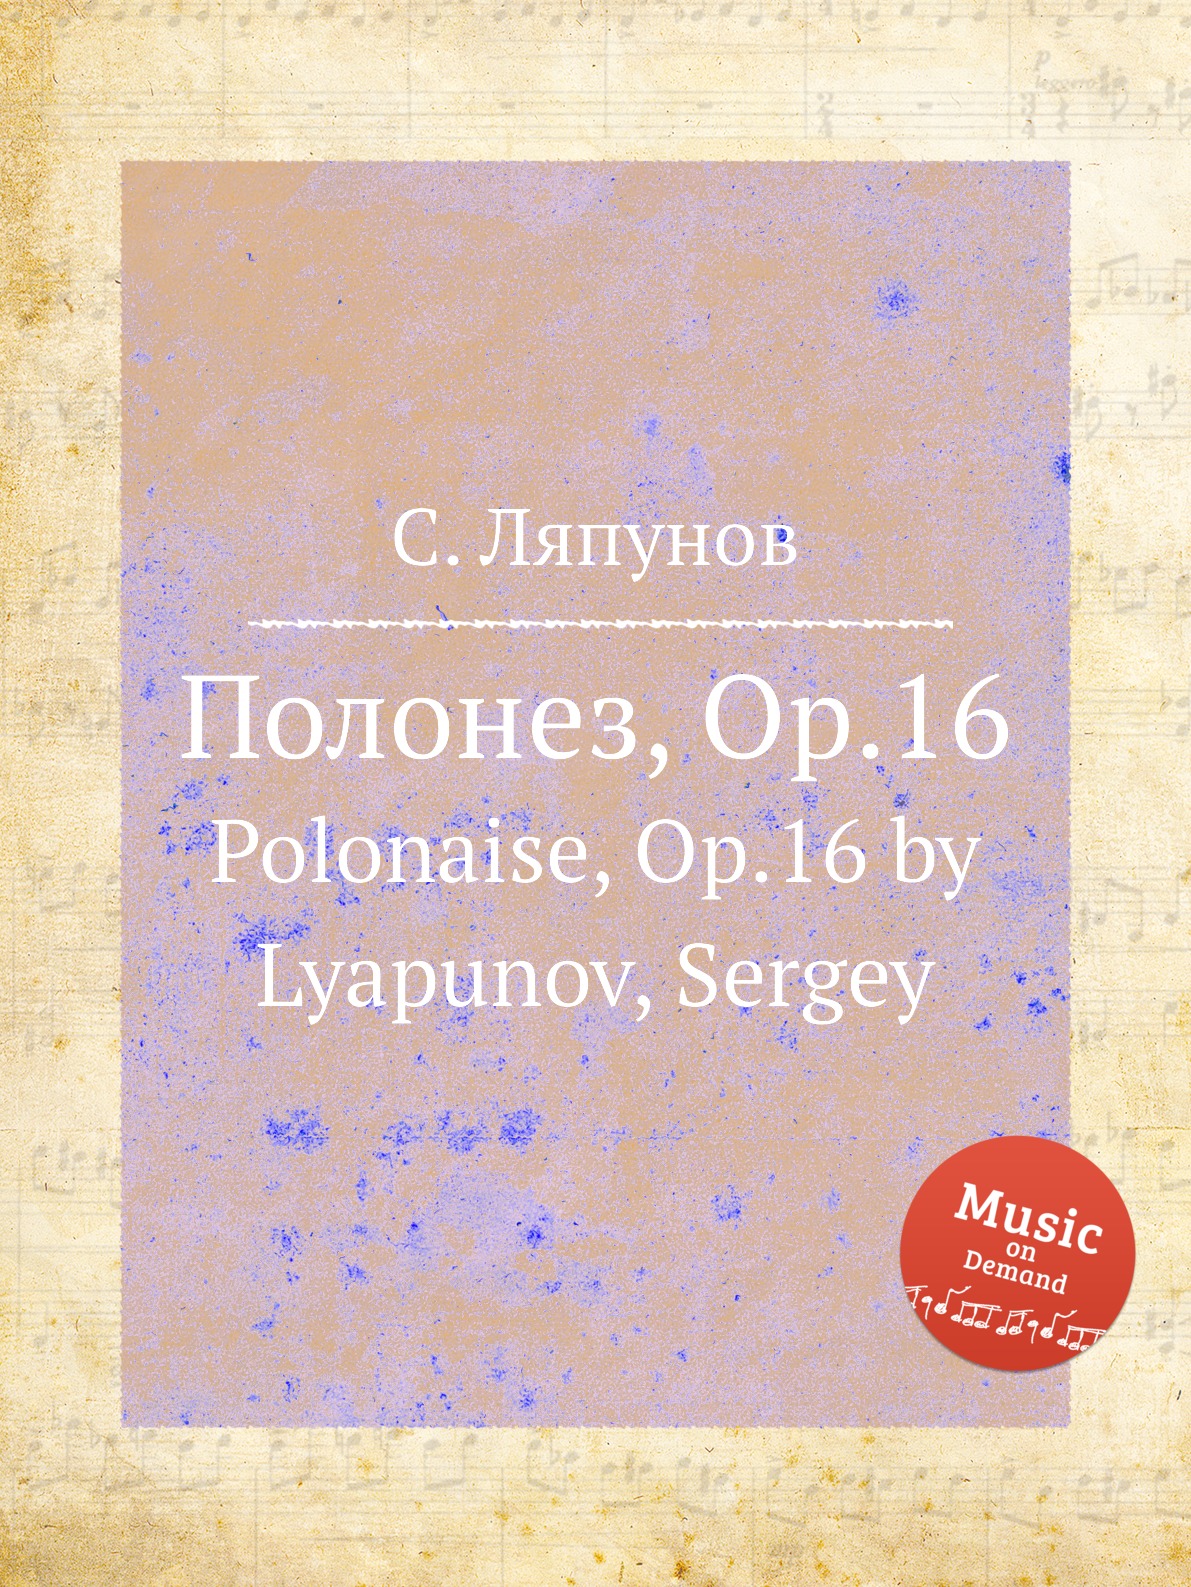 фото Книга полонез, op.16. polonaise, op.16 by lyapunov, sergey музбука